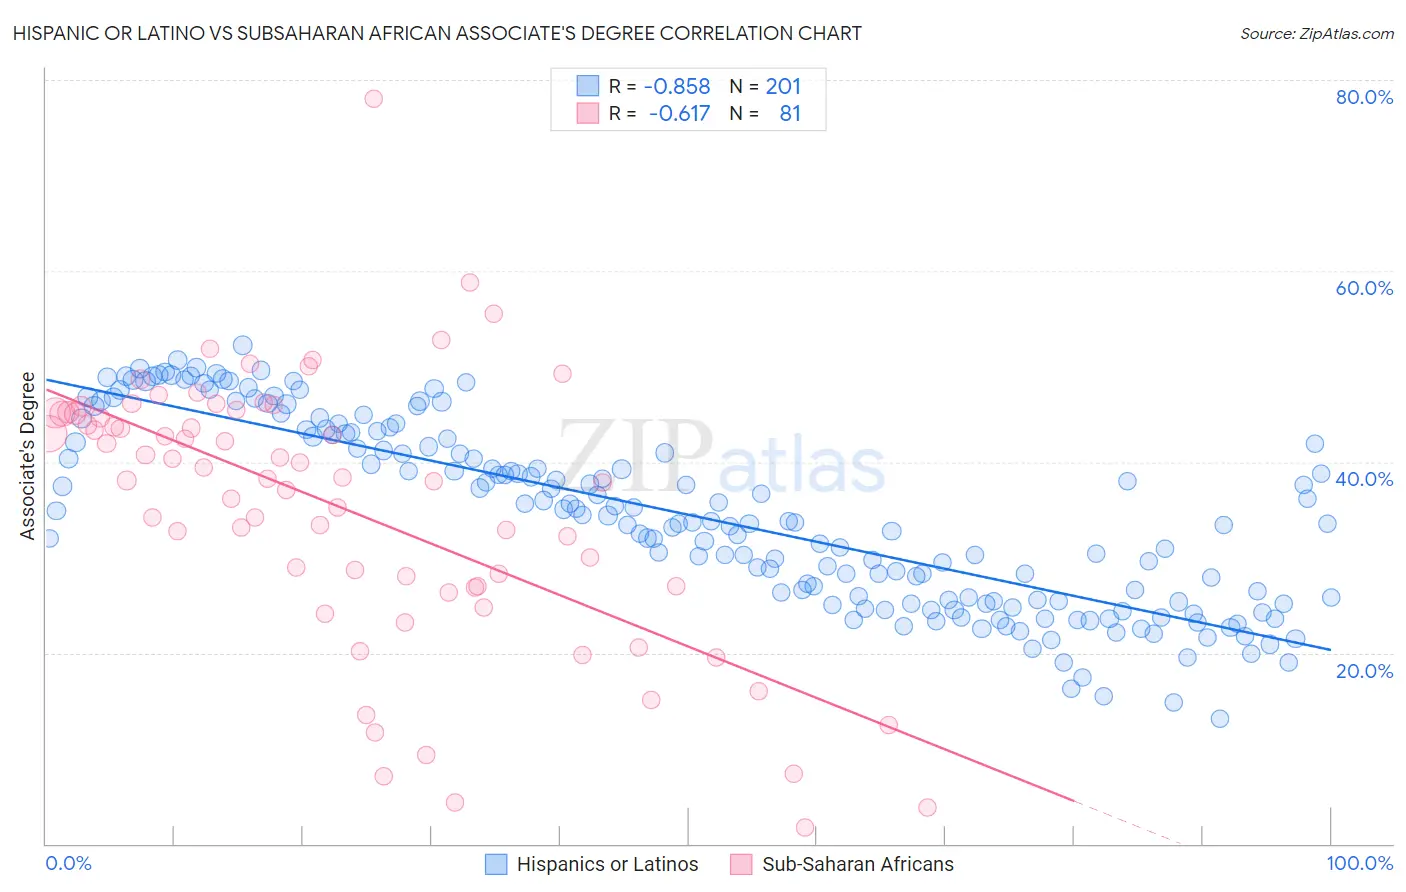 Hispanic or Latino vs Subsaharan African Associate's Degree